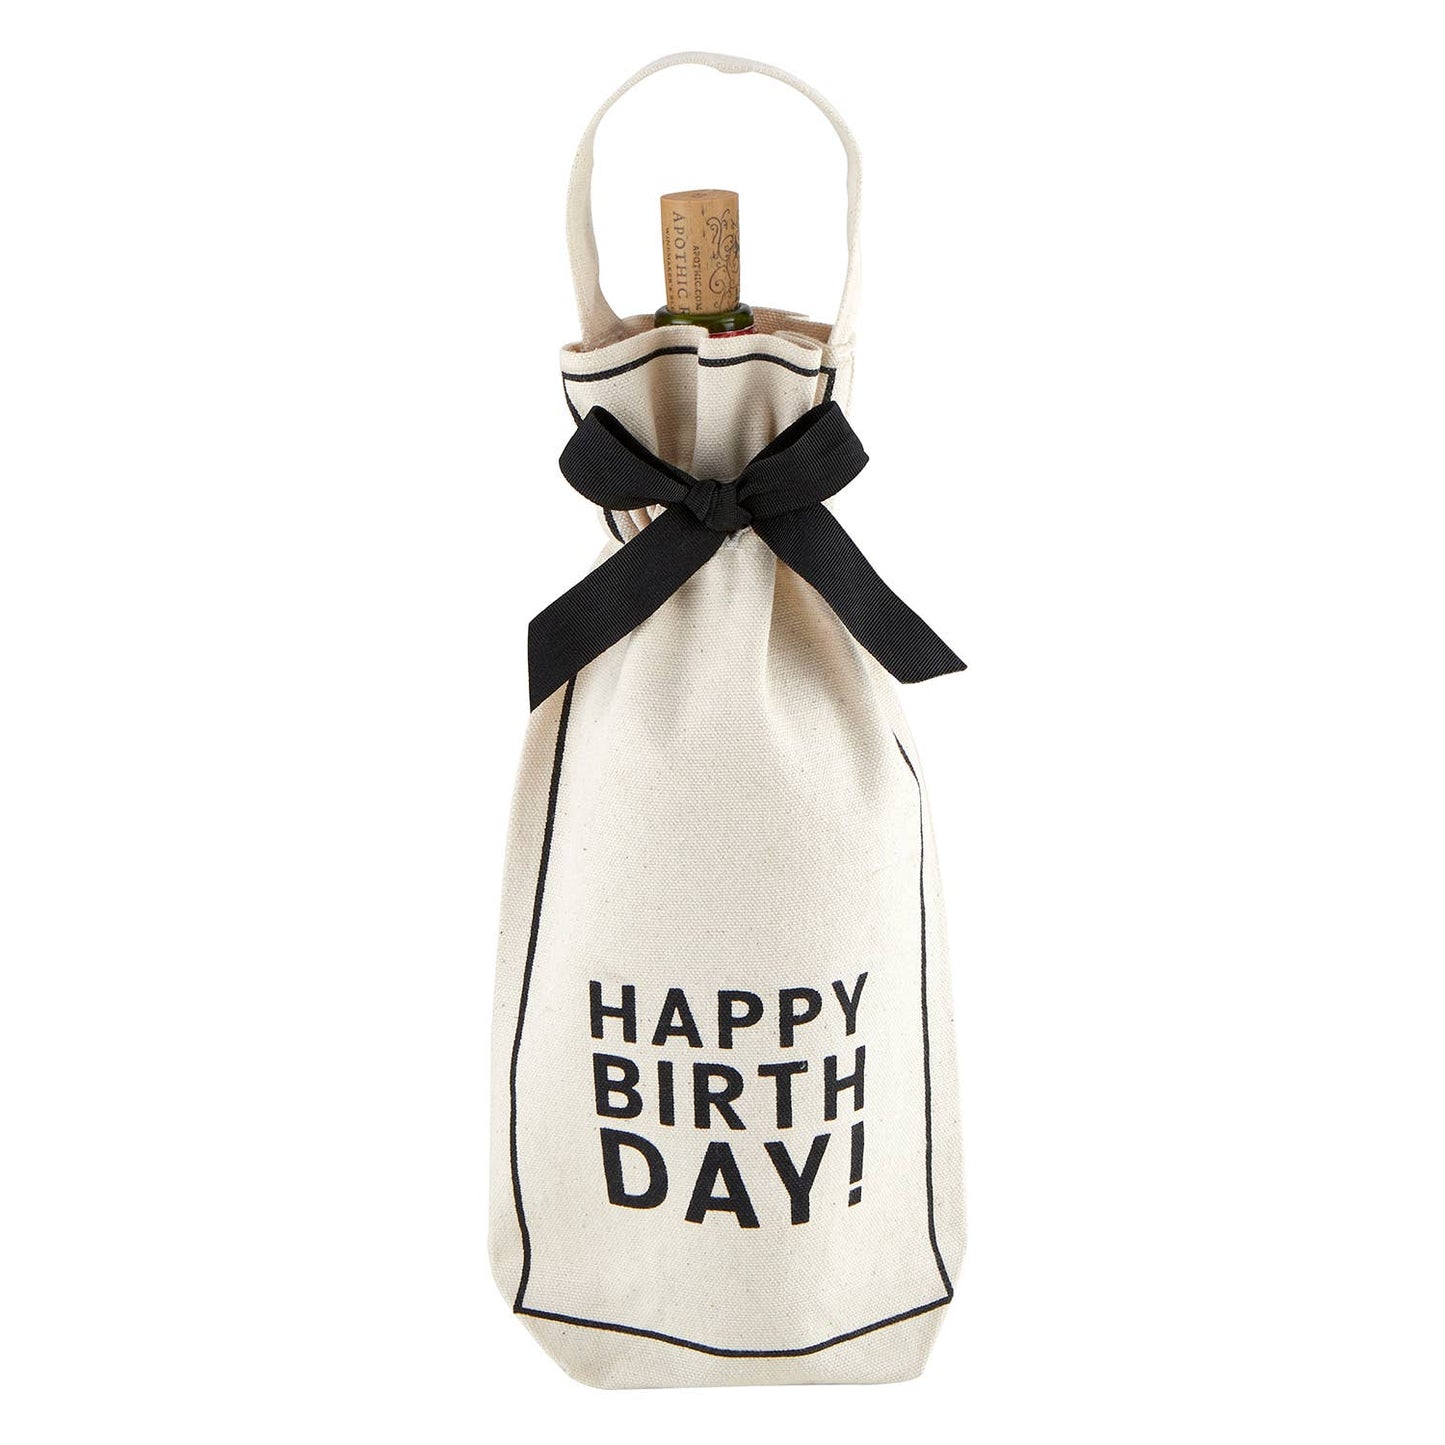 Creative Brands - Wine Bag - Happy Birthday